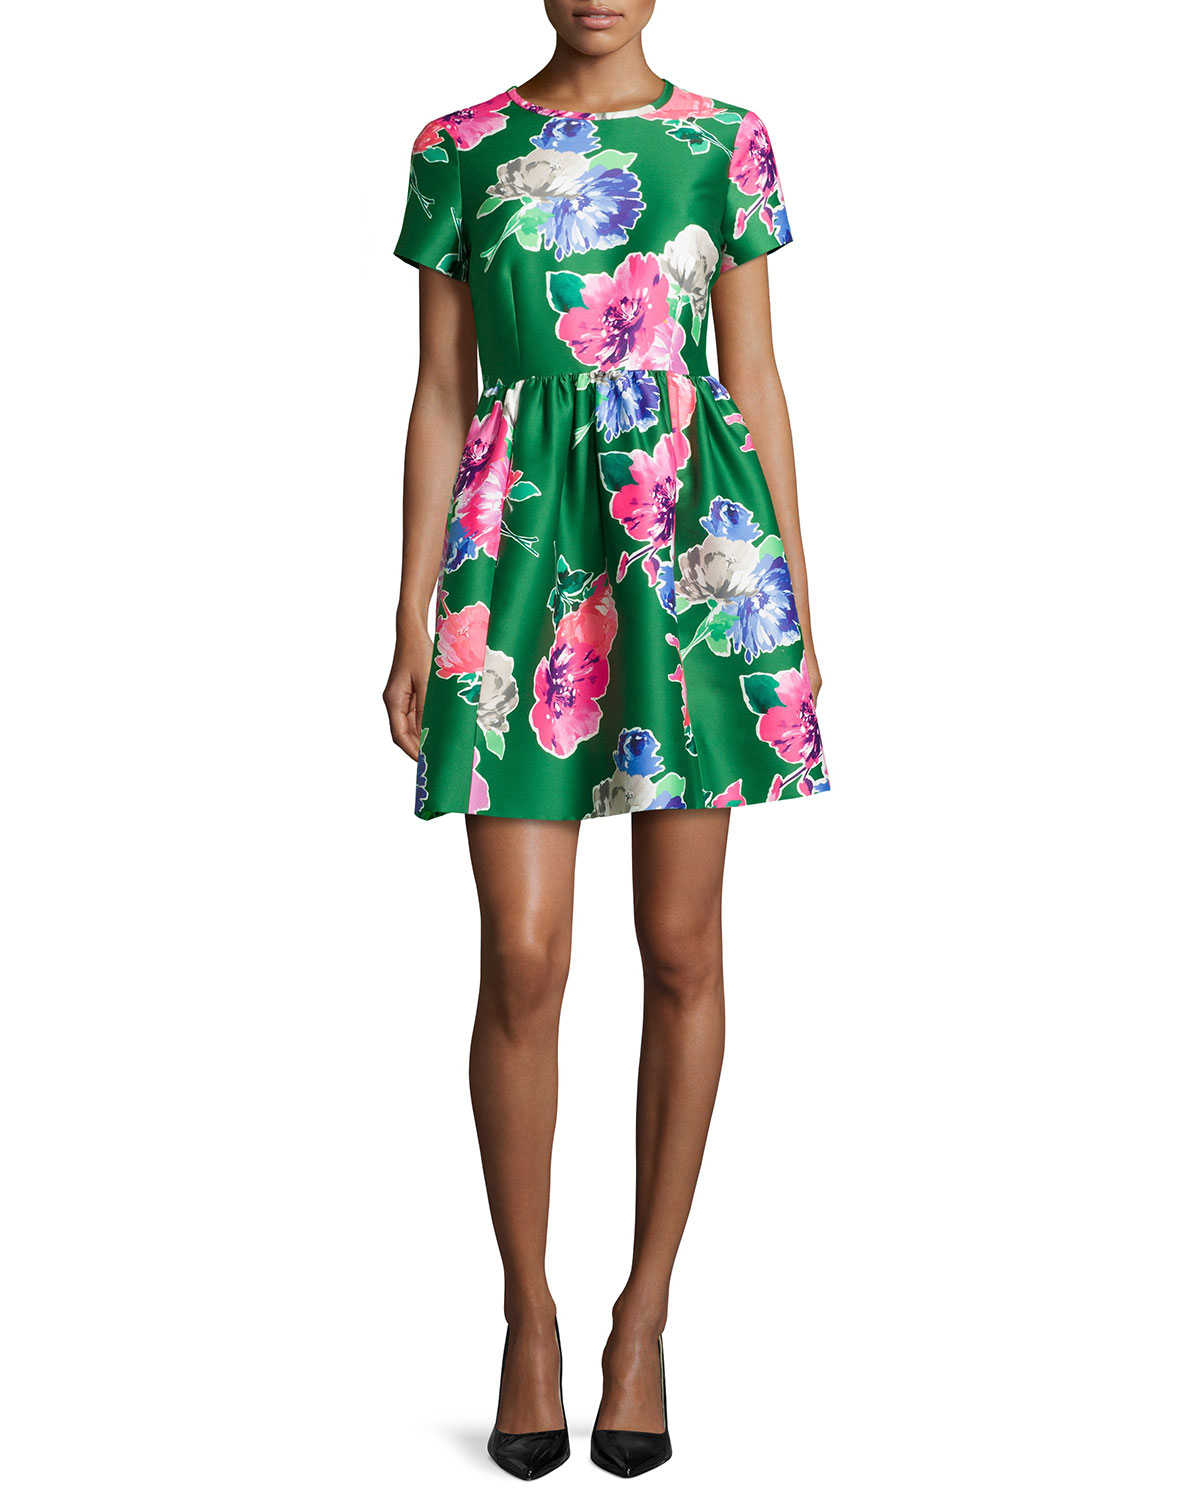 Kate spade new york Stelli Floral-Print Dress in Green | Lyst